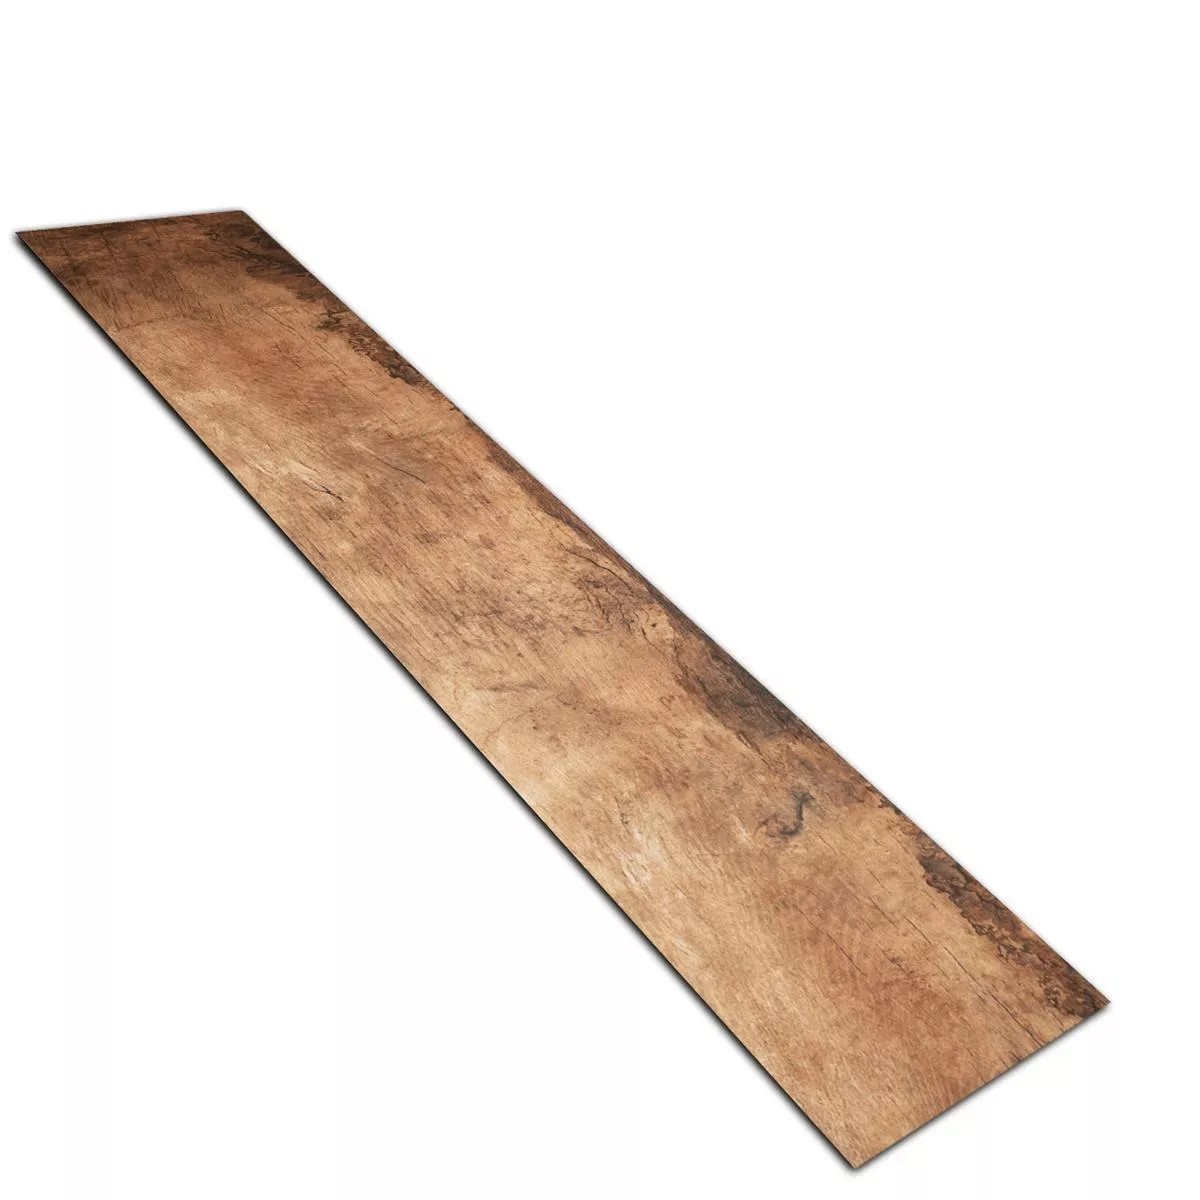 Sample Floor Tiles Wood Optic Global Light Brown 20x180cm